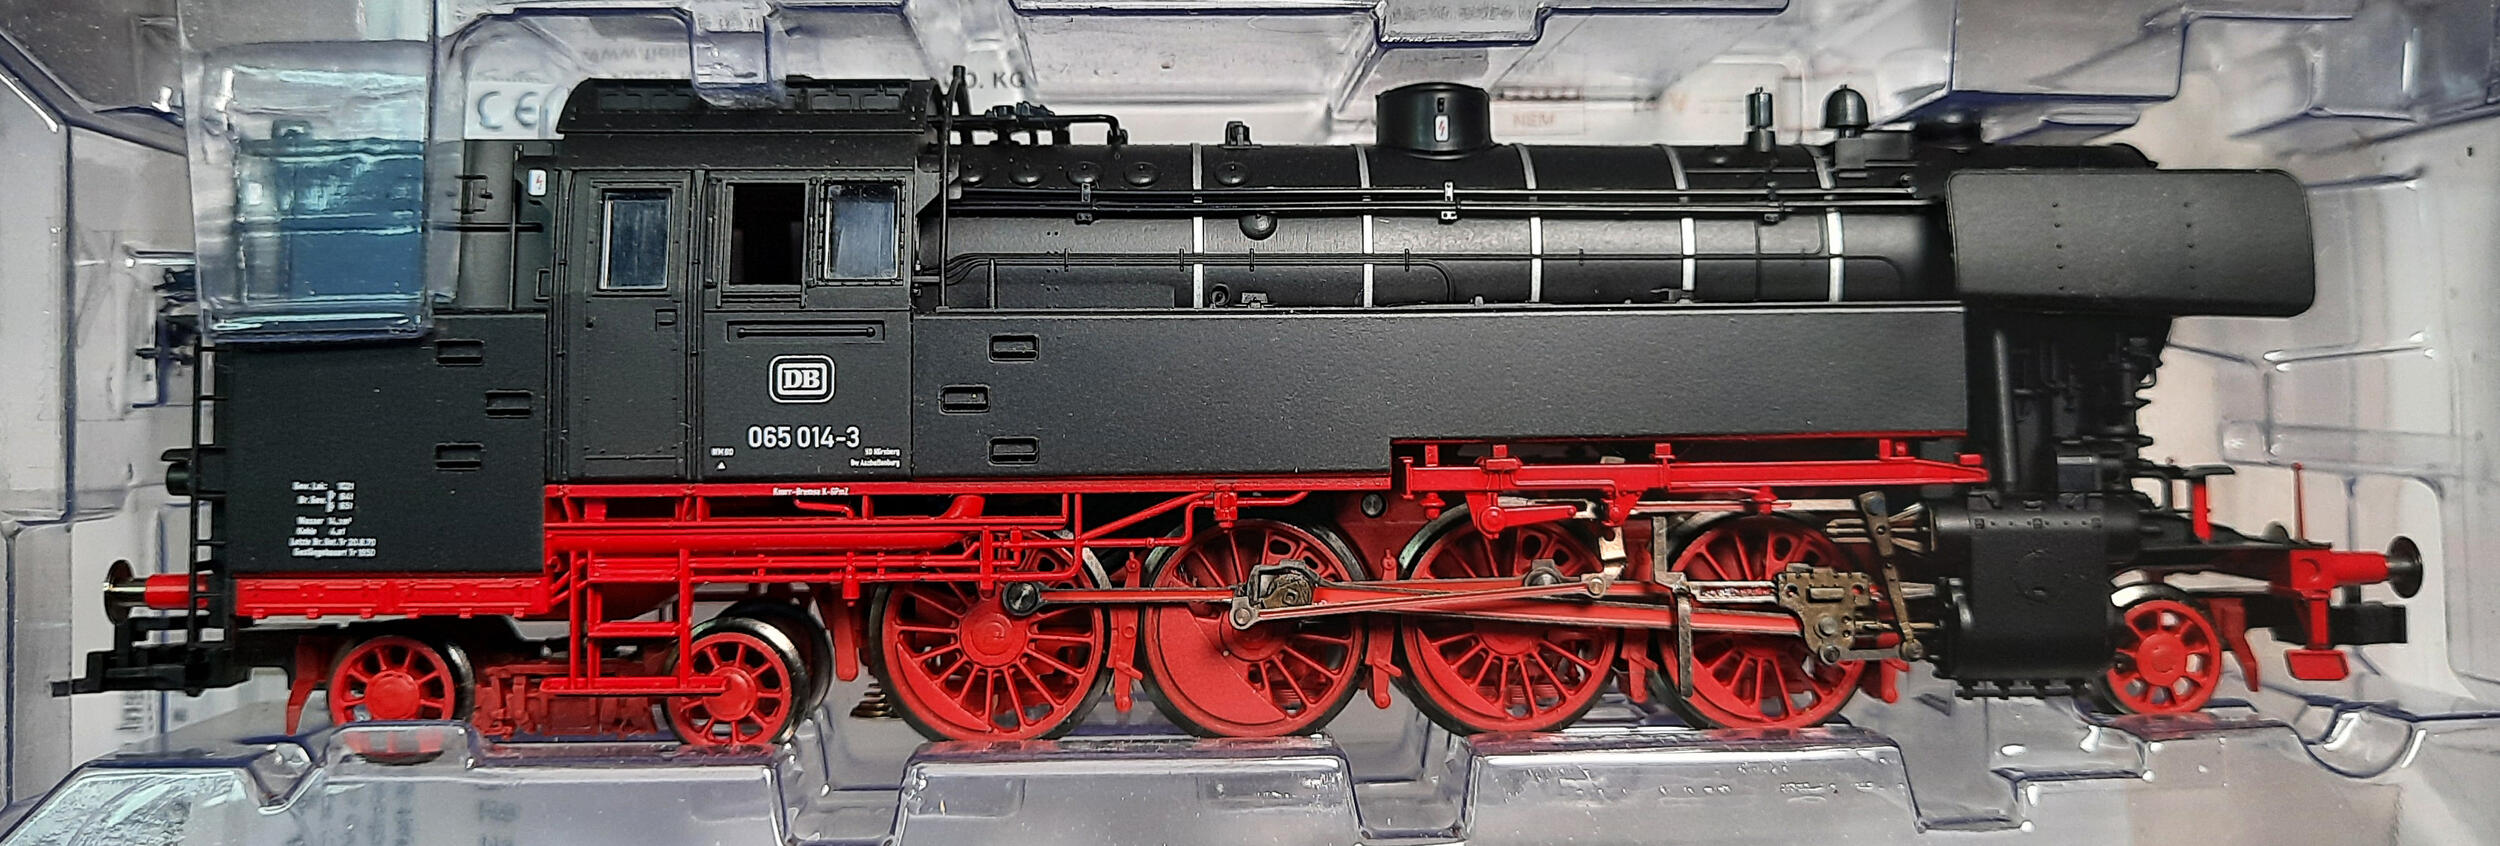 700.40: Eisenbahn